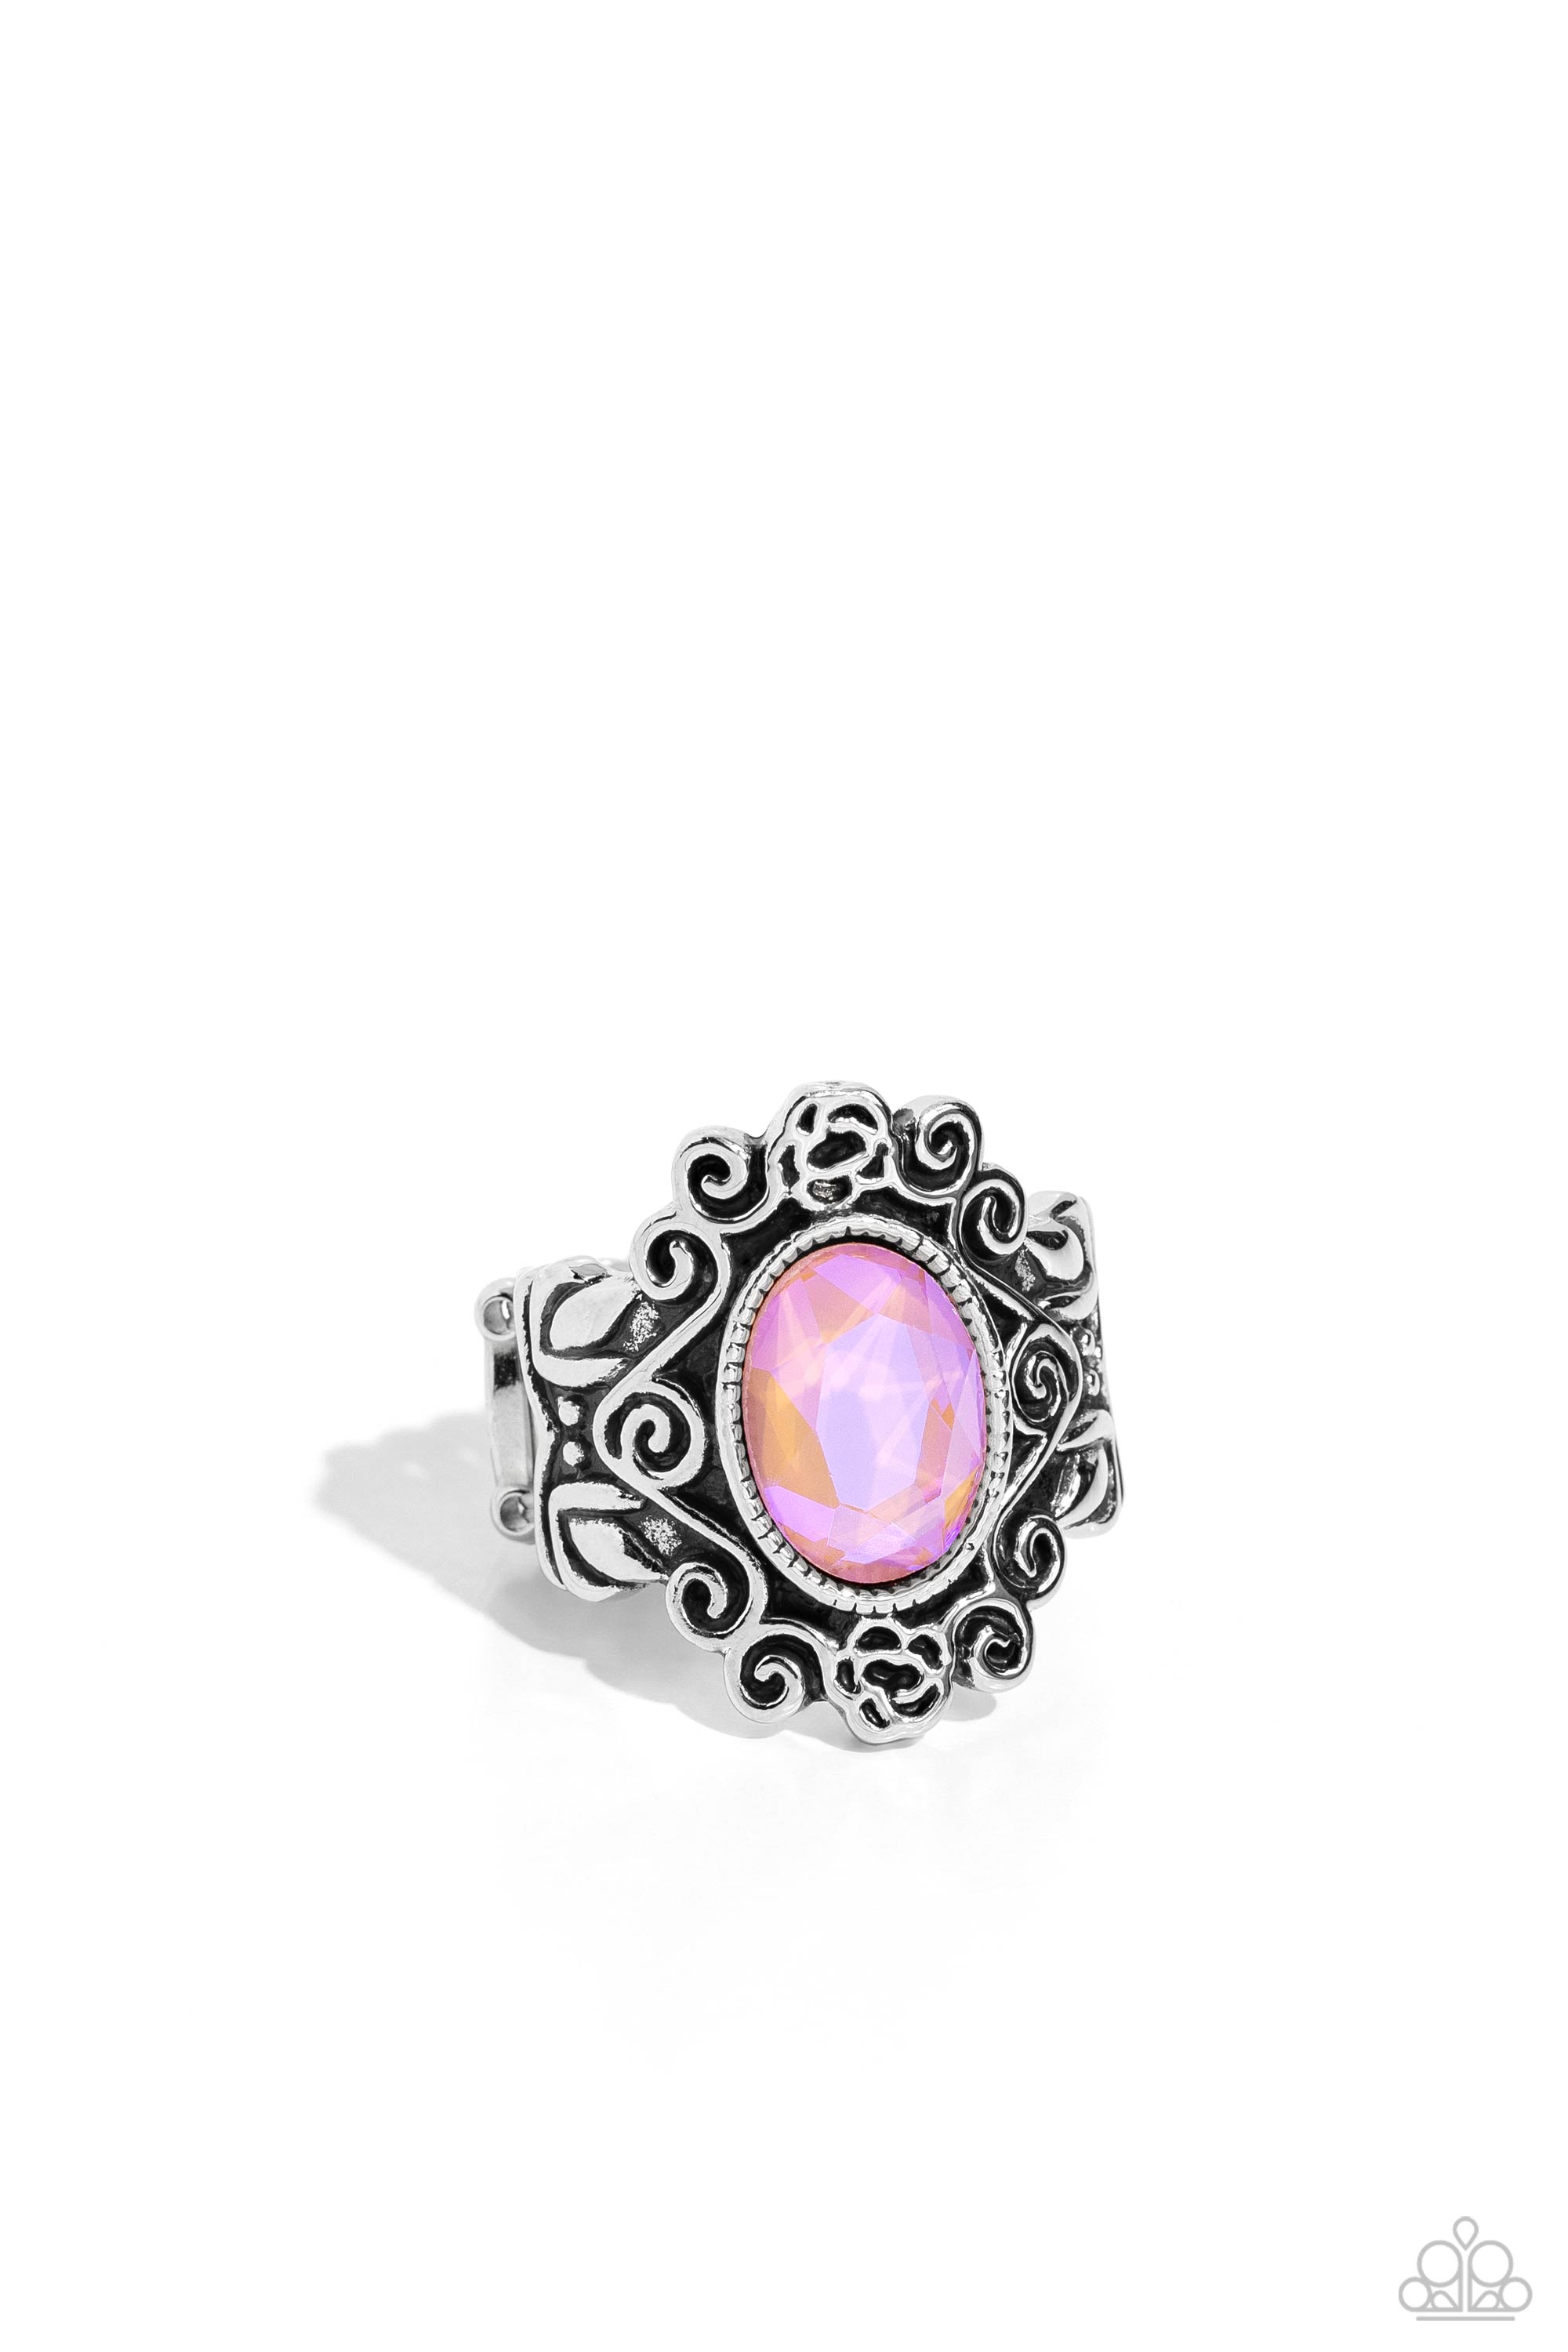 Fairytale Fanatic Peach Orange Gem Ring - Paparazzi Accessories- lightbox - CarasShop.com - $5 Jewelry by Cara Jewels